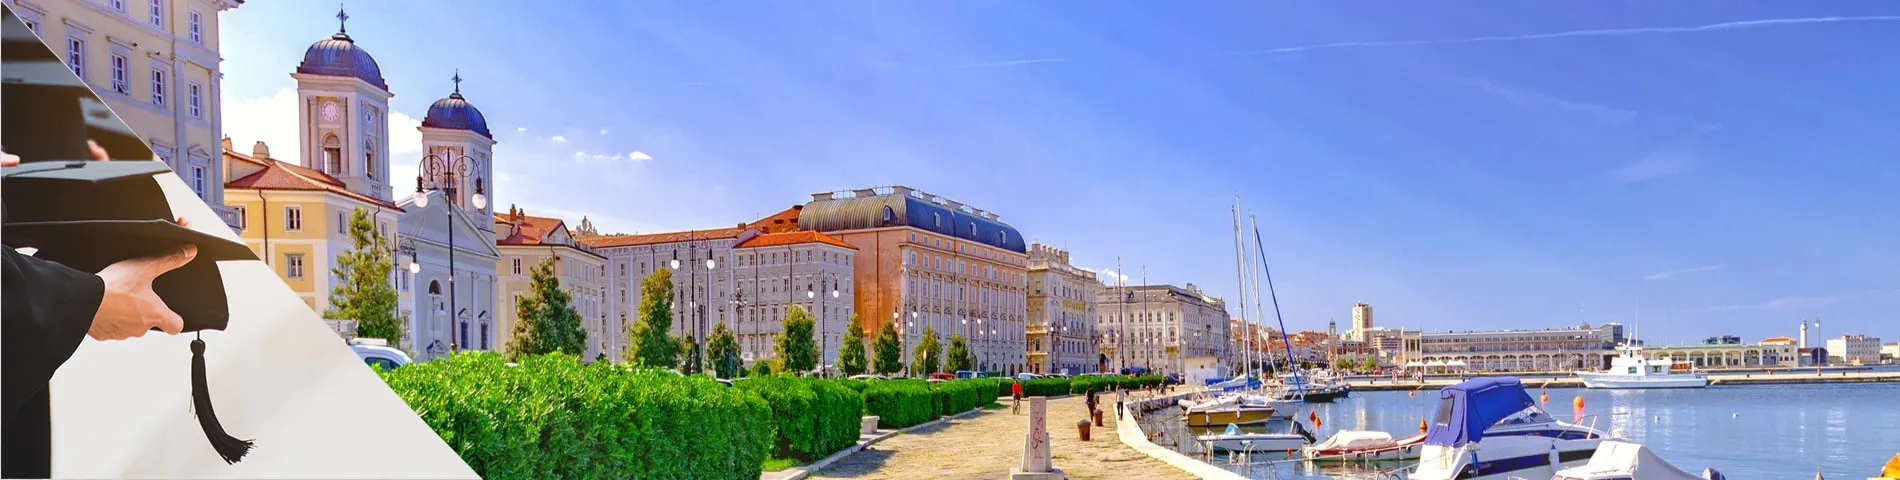 Trieste - University